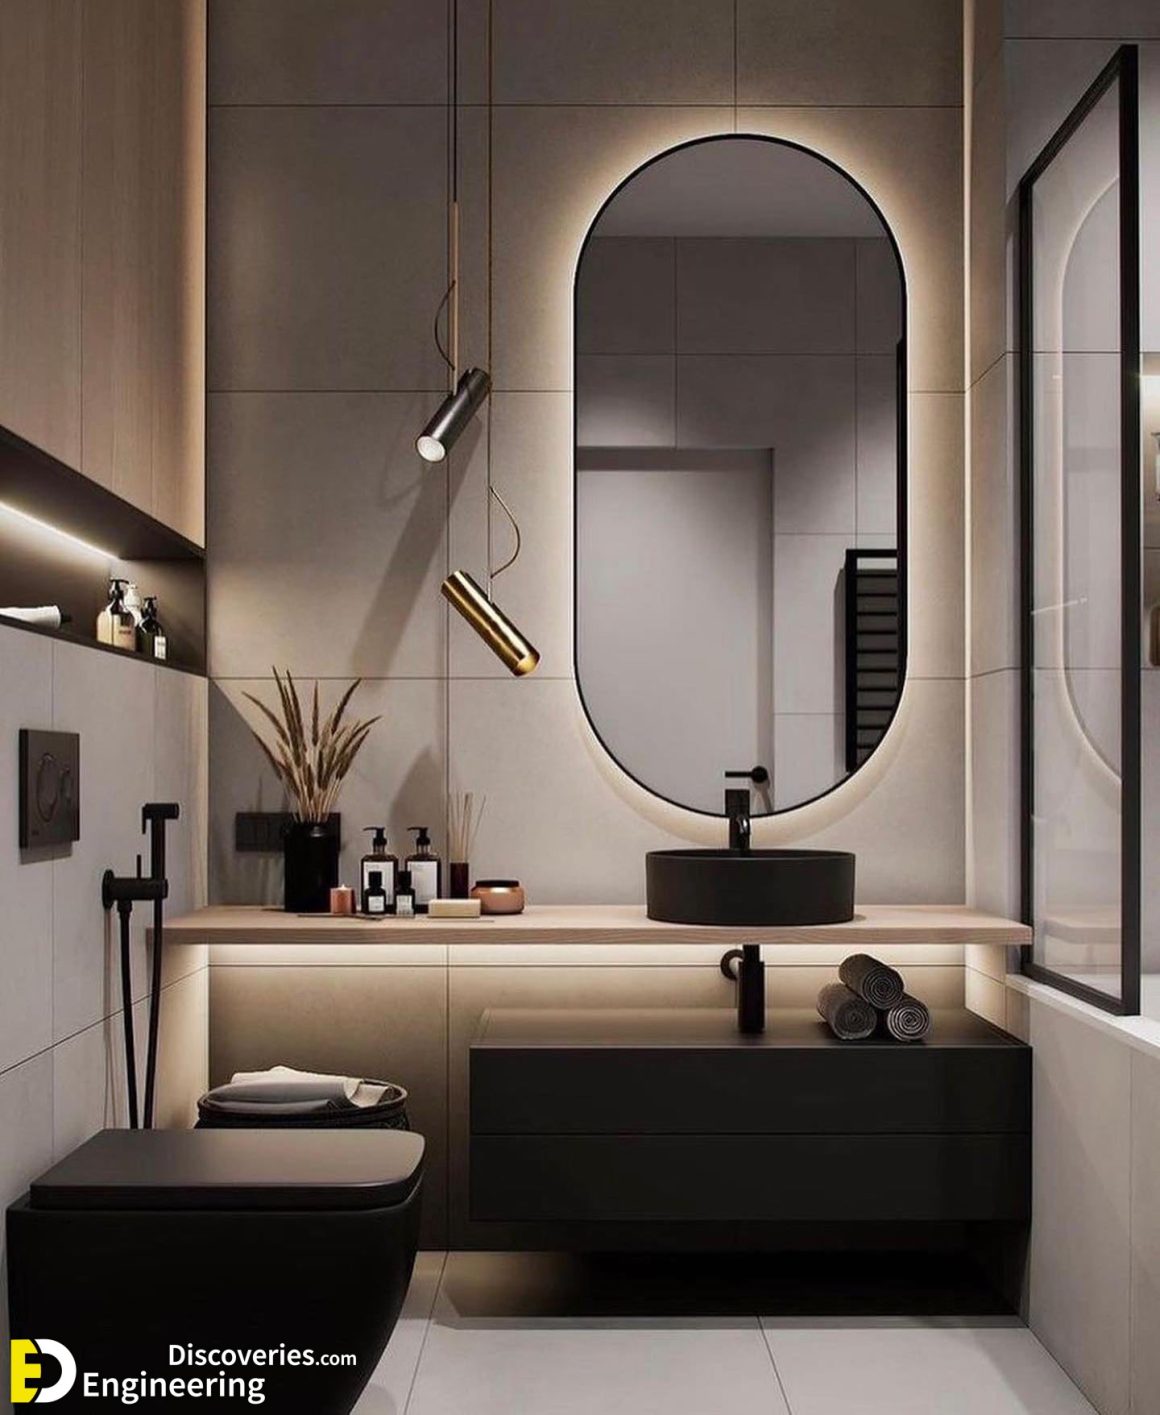 Stunning Contemporary Bathroom Design Ideas | Engineering Discoveries